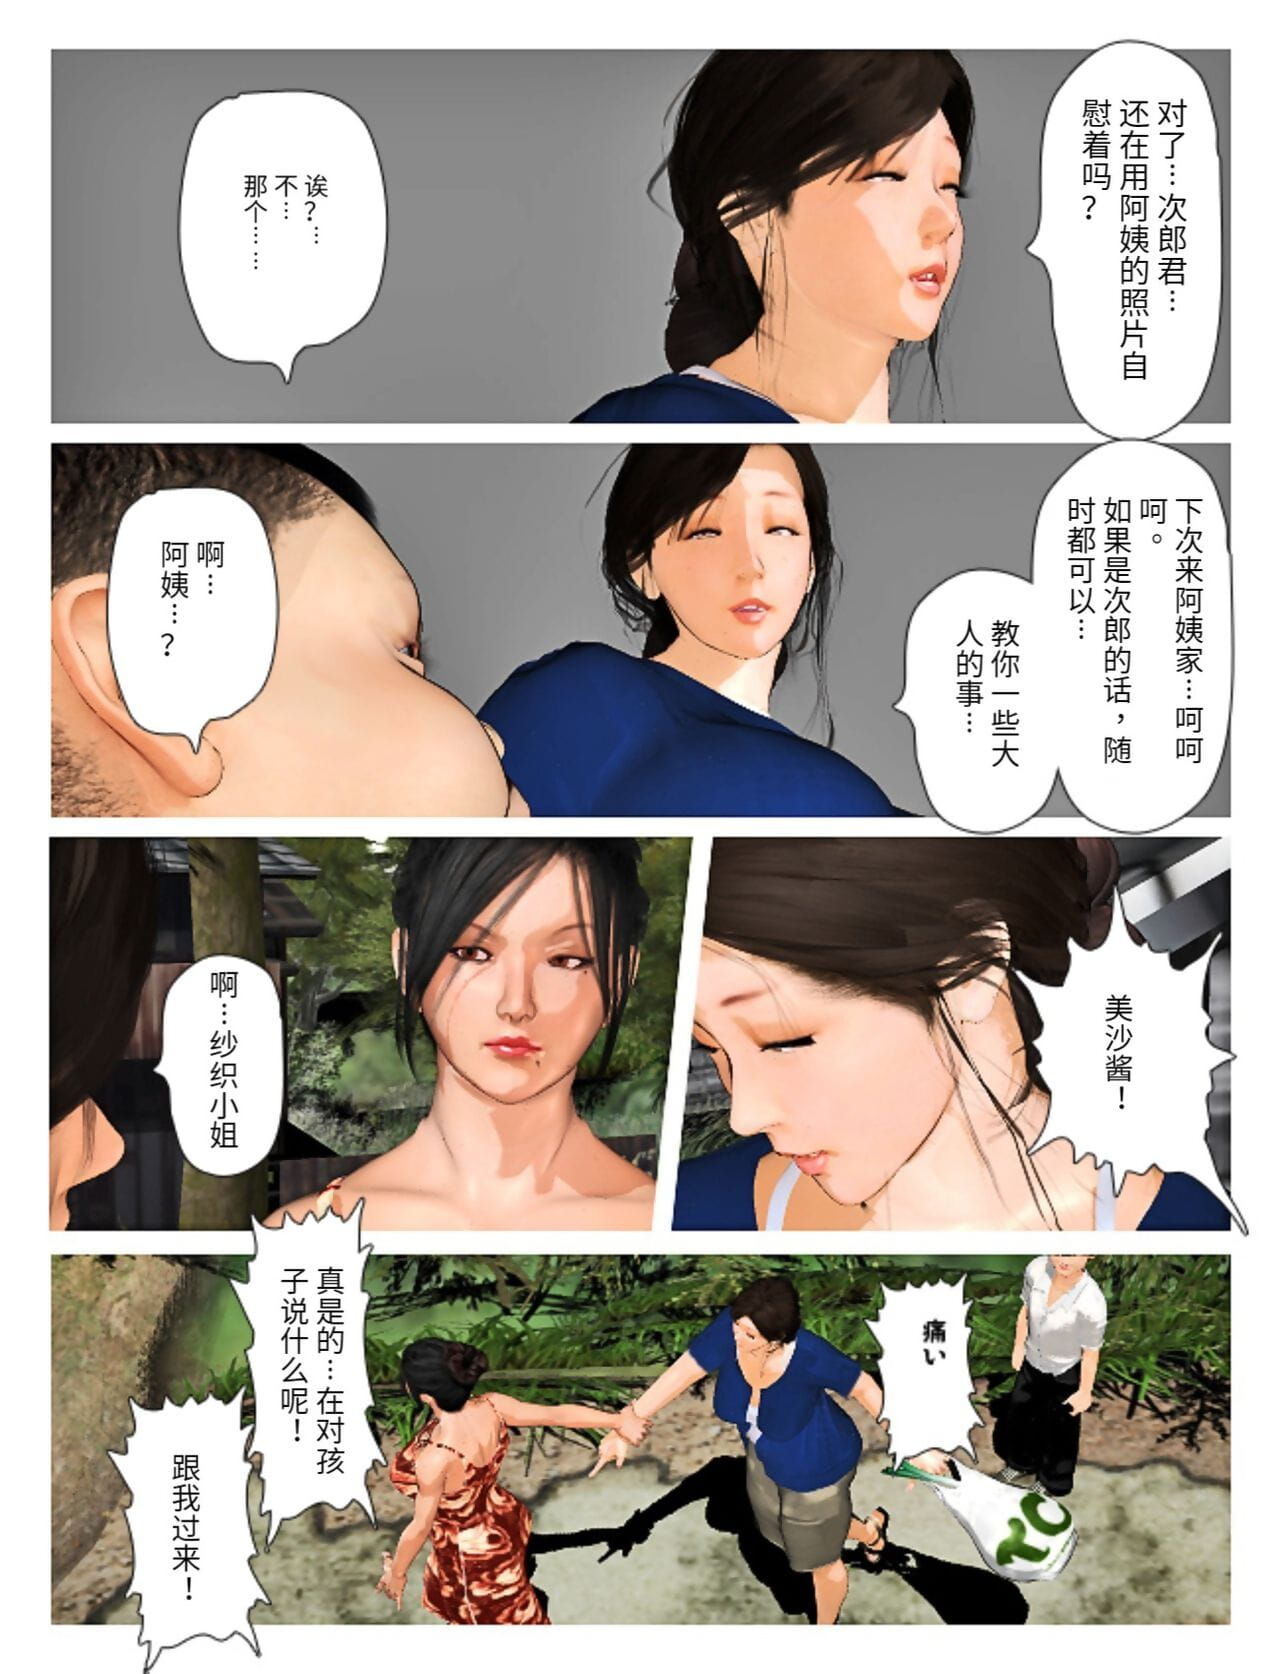 Kyou no misako San 2019:4 Parte 3 page 1